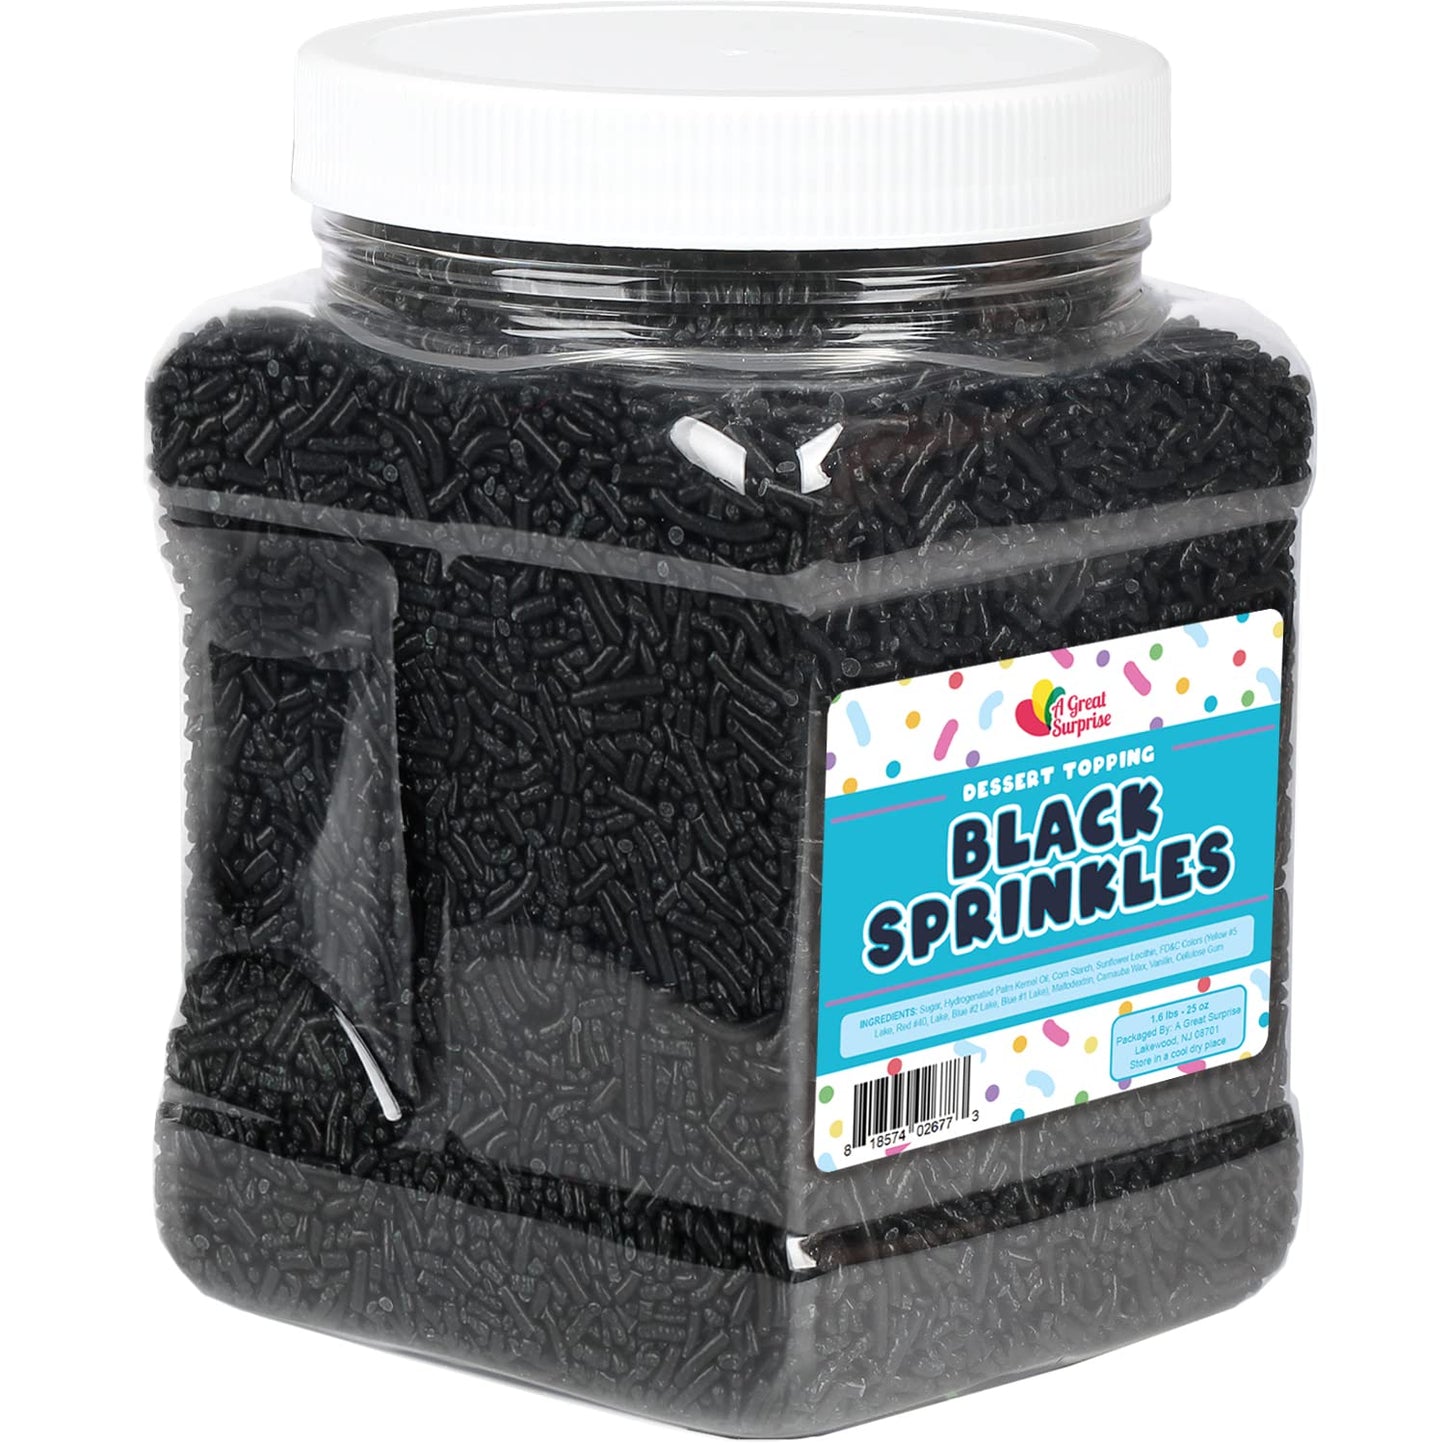 Black Sprinkles -  1.6 Pounds - Bulk Black Jimmies for Desserts, Baking, Cakes, Cupcakes